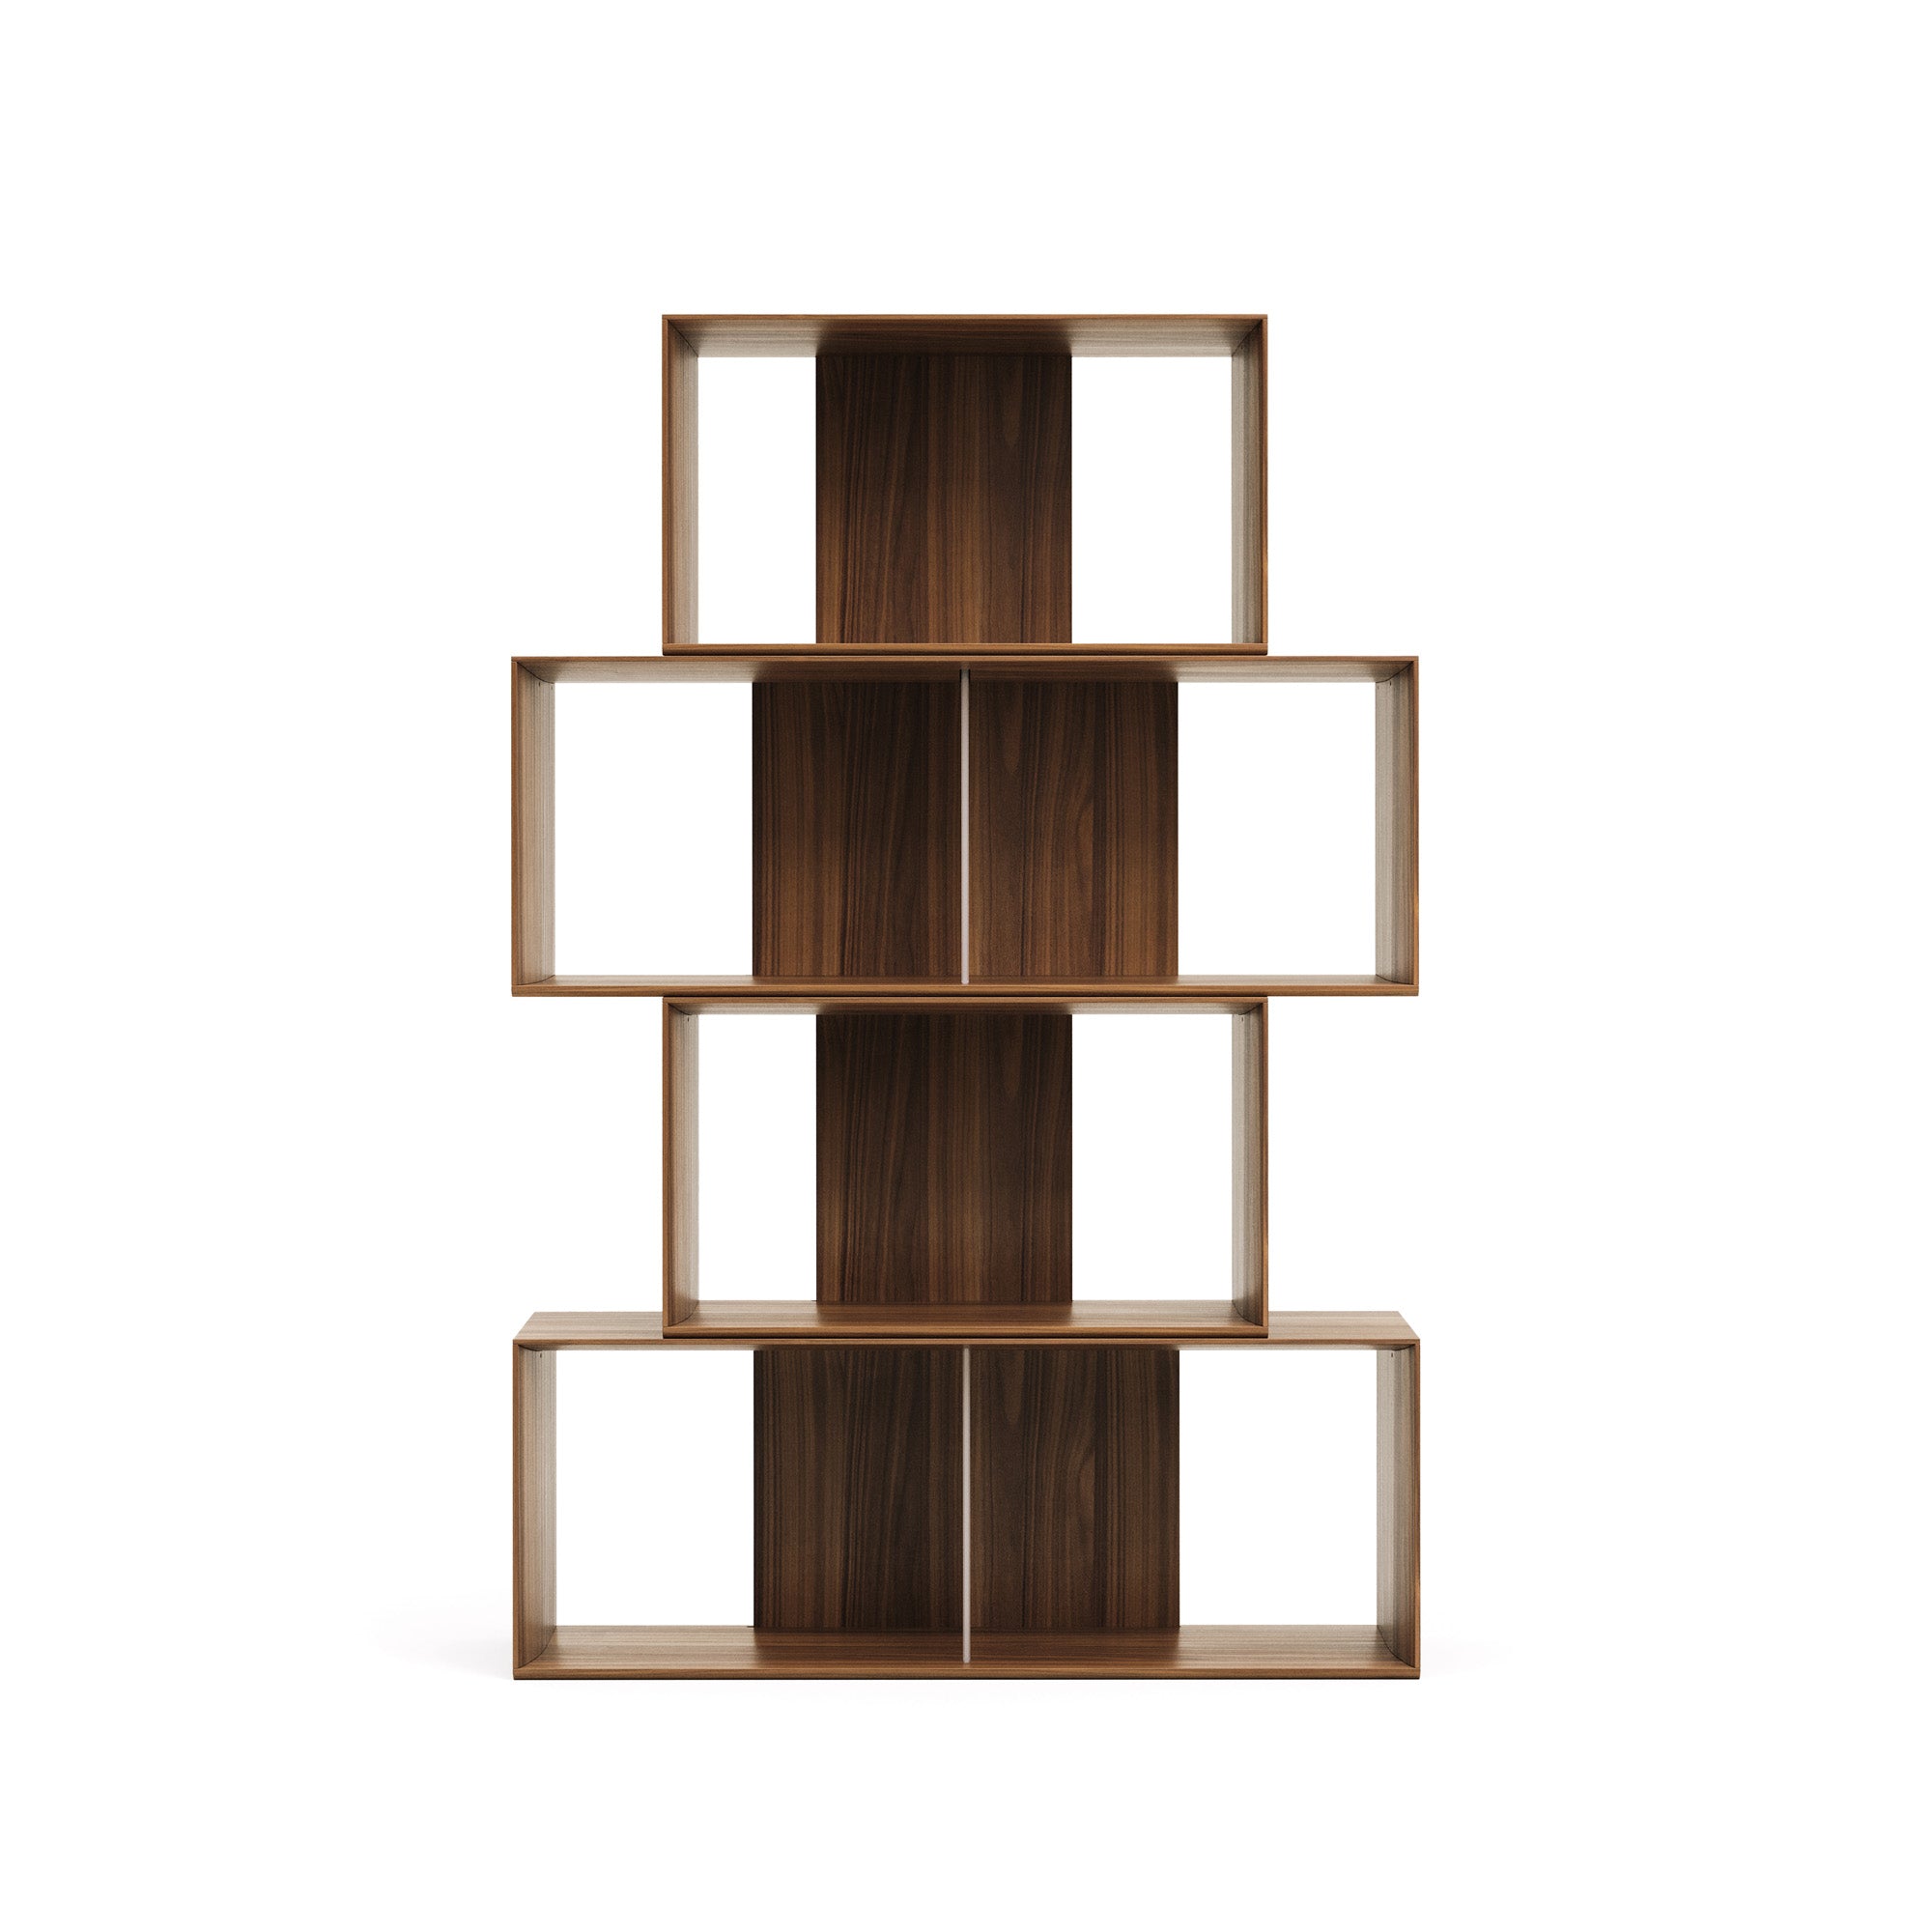 Litto set of 4 modular shelving units in walnut wood veneer, 168 x 76 cm